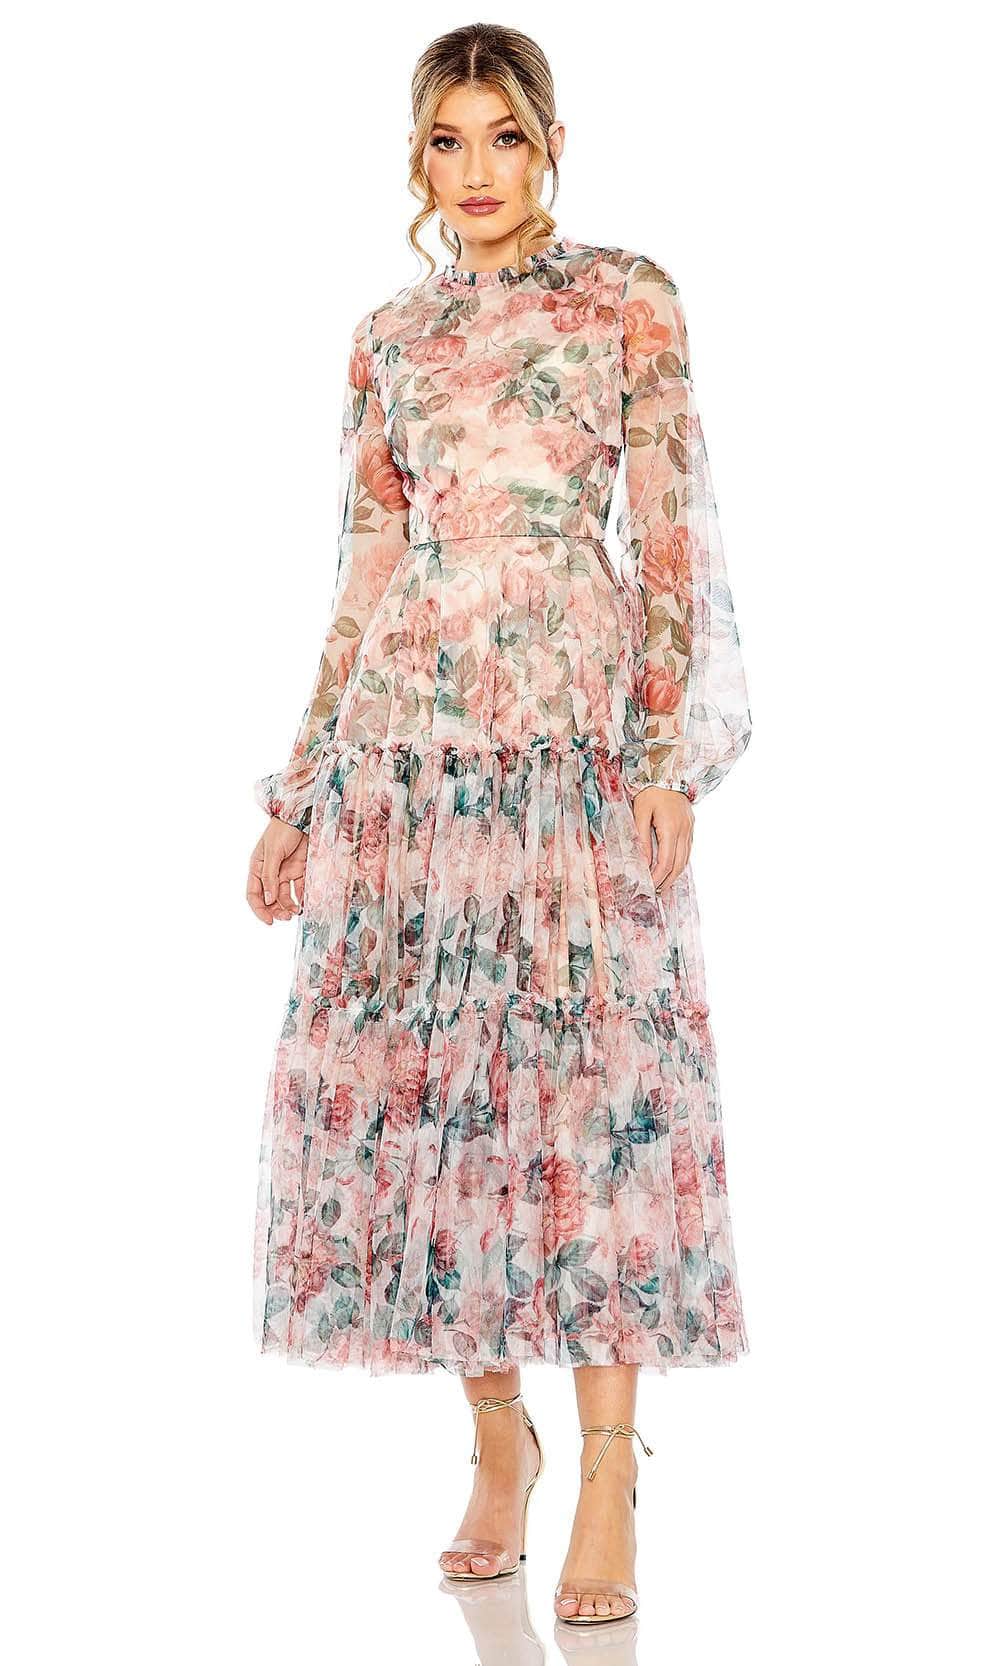 Image of Mac Duggal 11405 - Floral High Neck Cocktail Dress